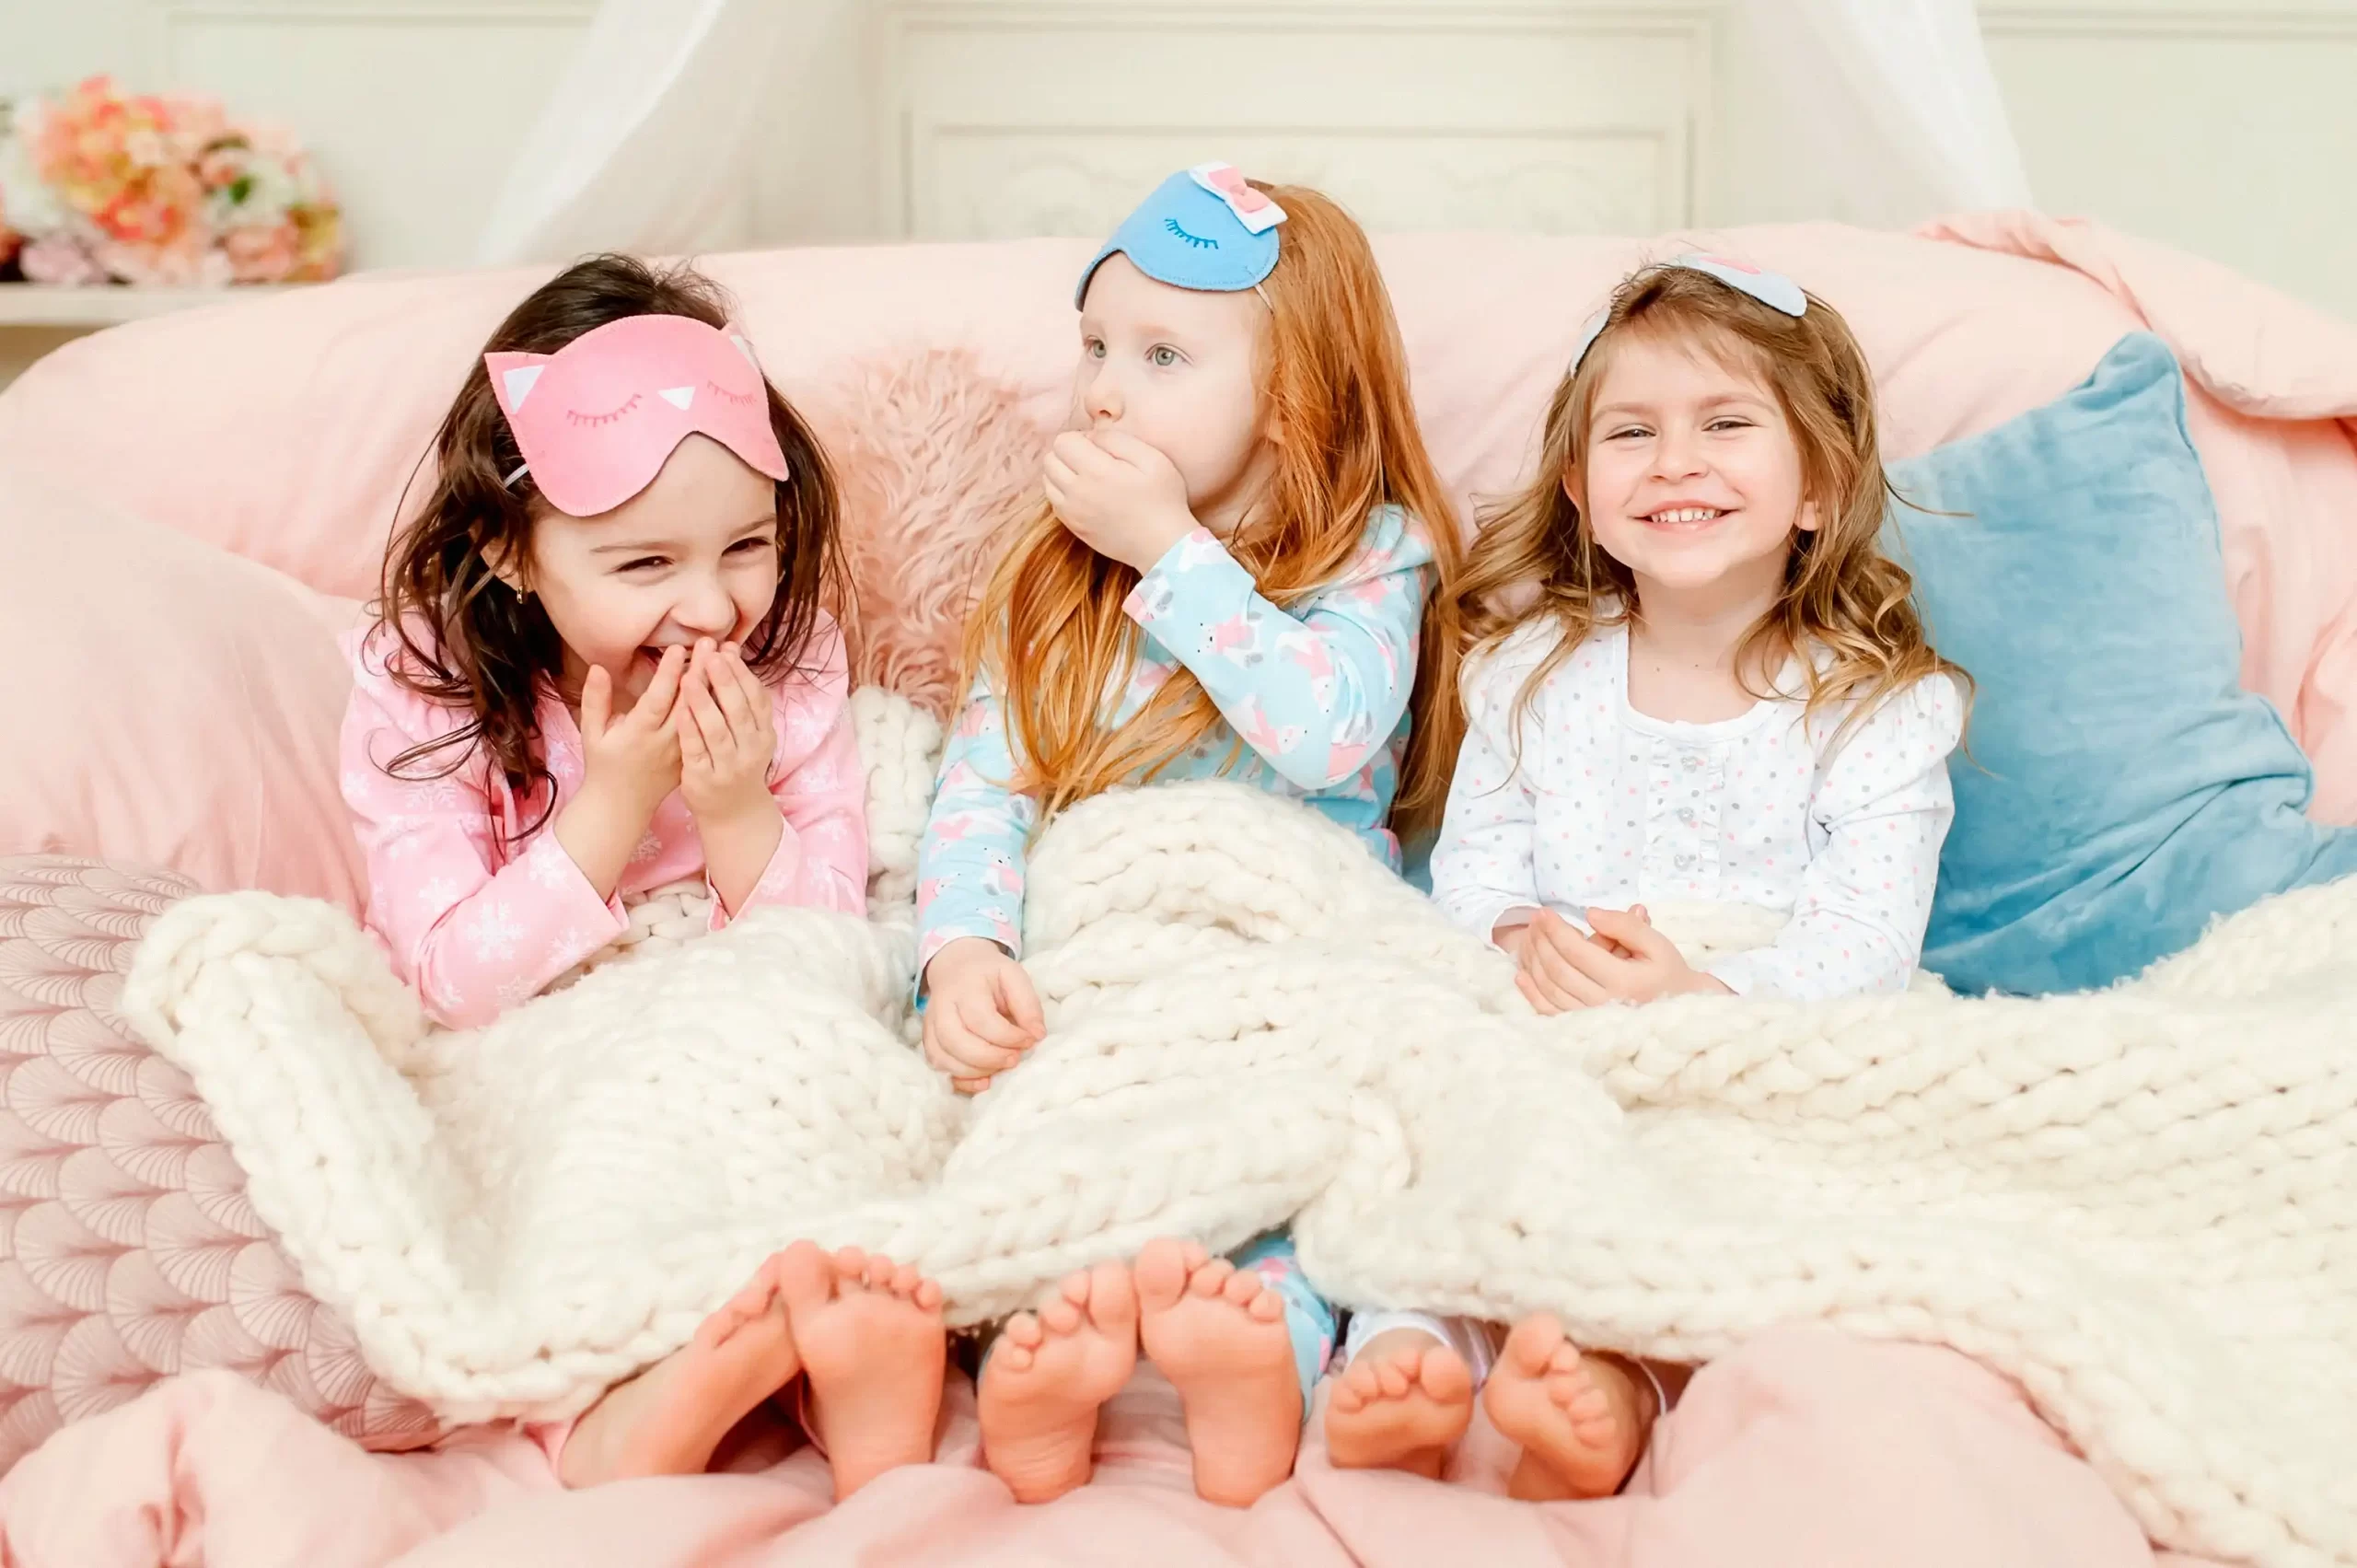 Three young girls enjoying an enchanting Teepee sleepover experience in cozy pajamas with sleep masks on their heads.